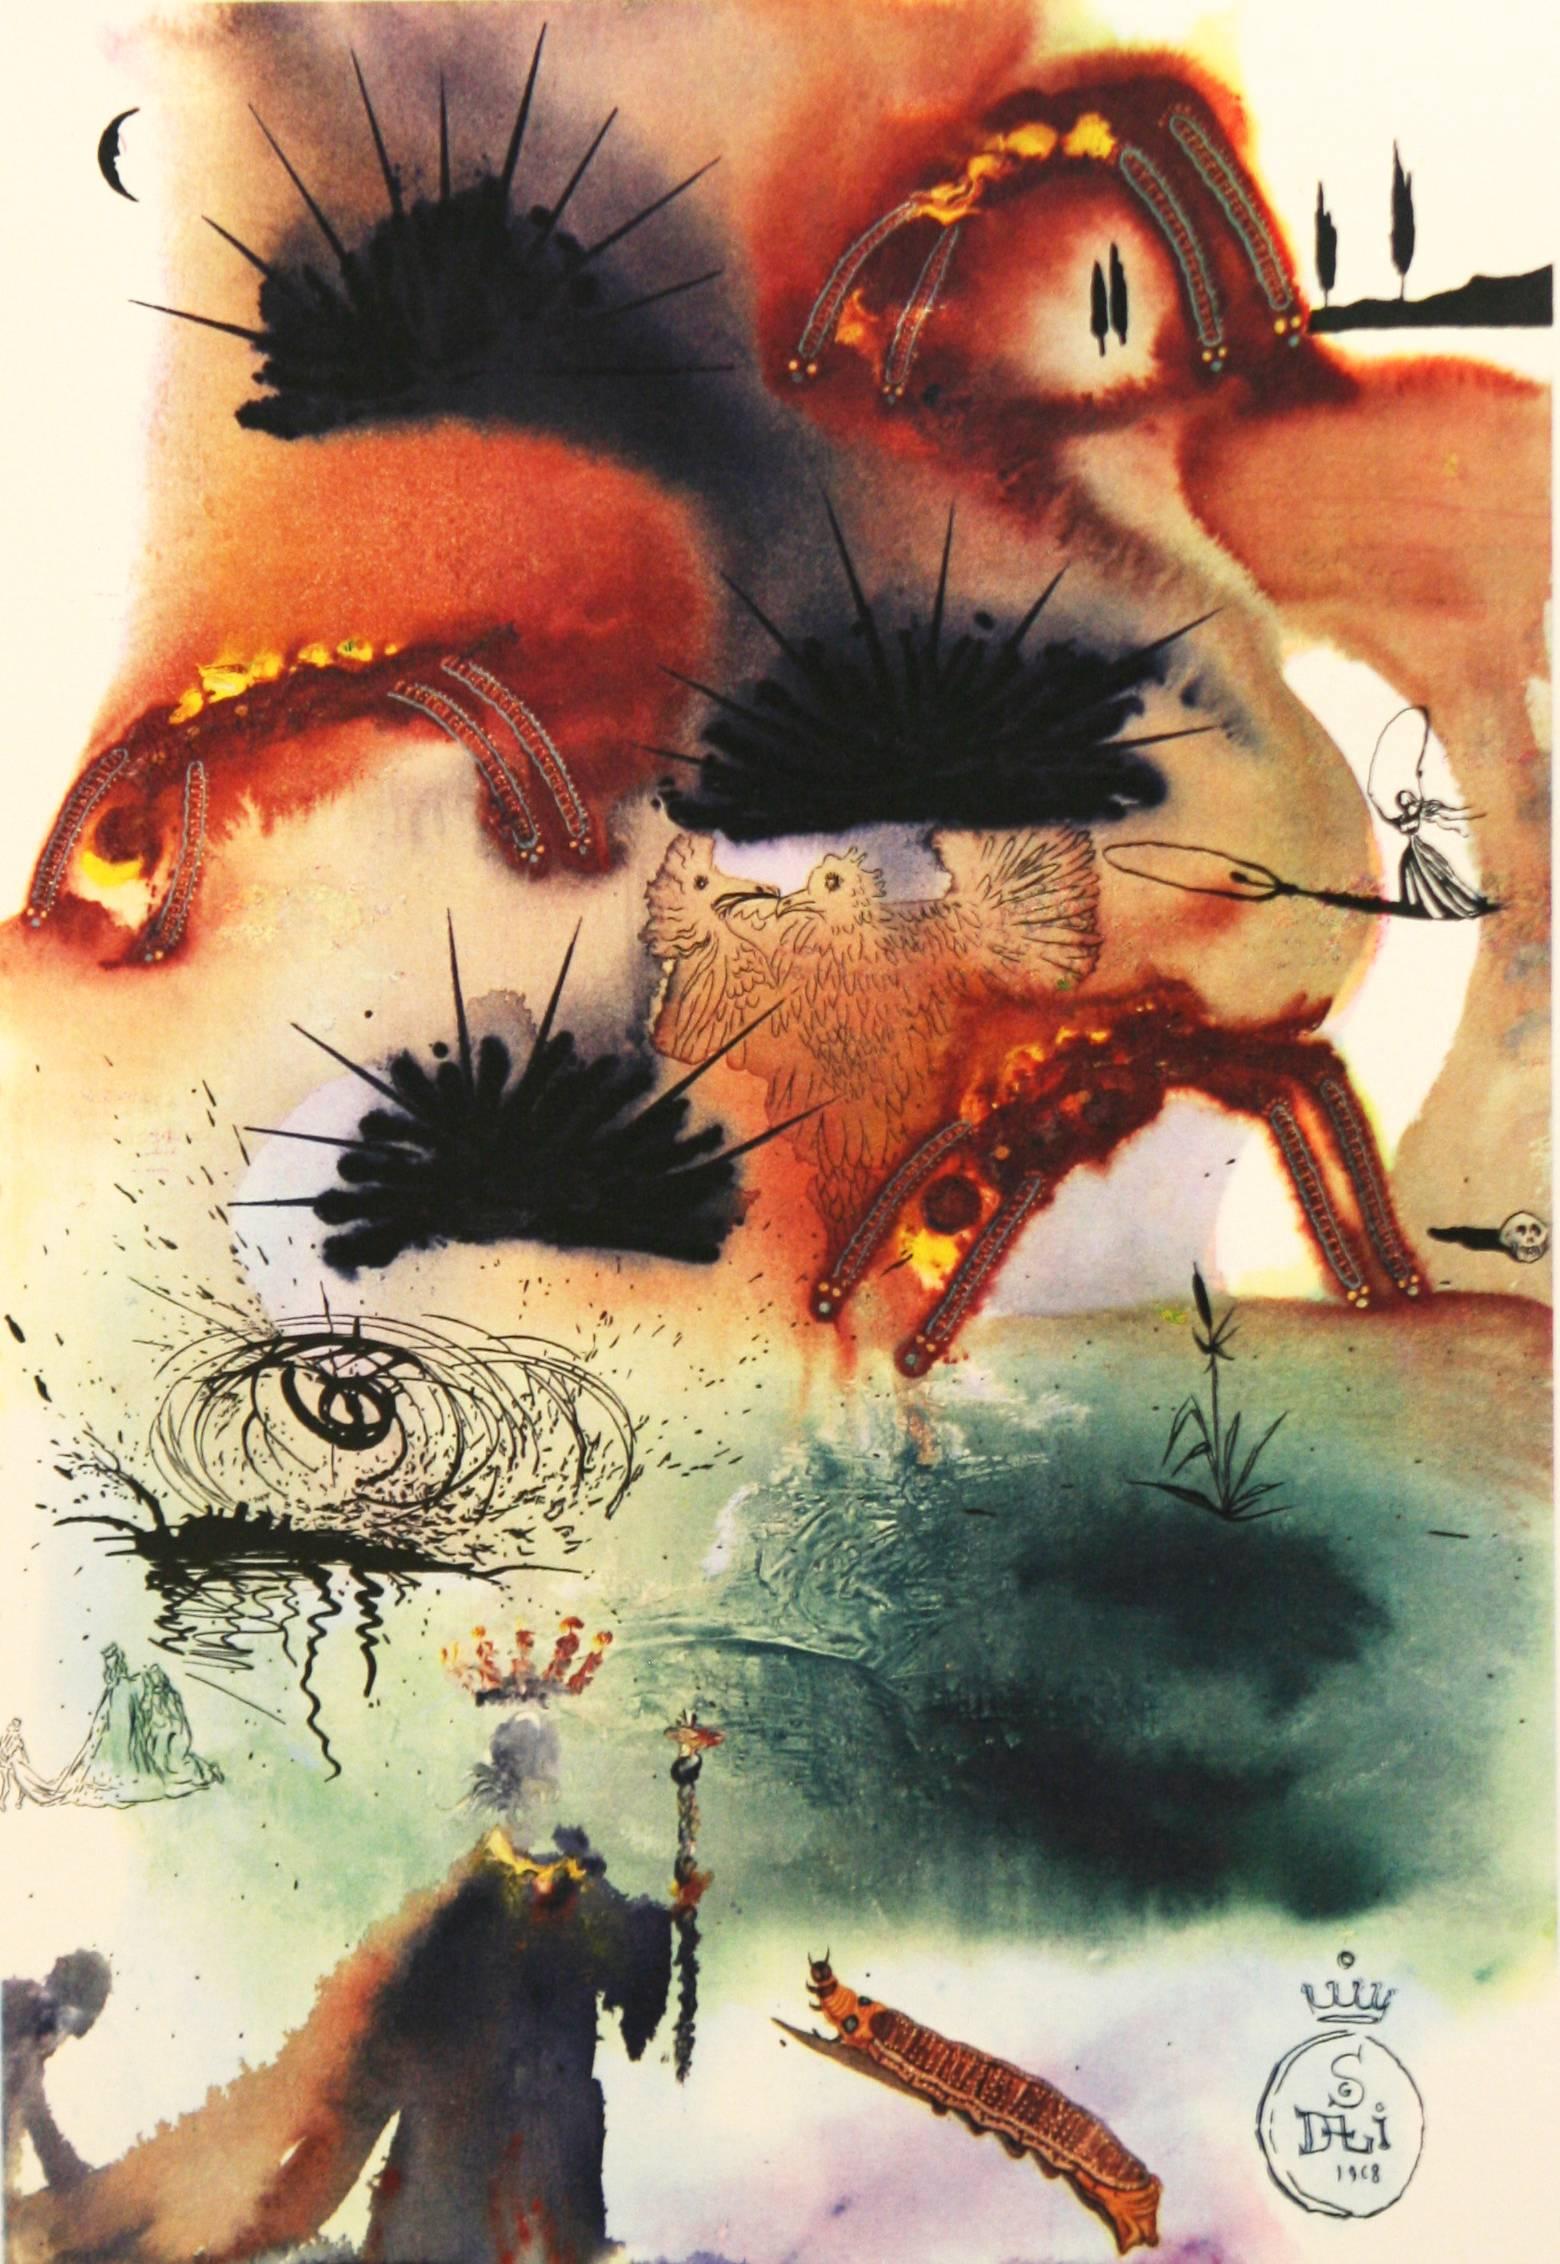 Salvador Dalí Abstract Print - The Lobster’s Quadrille Salvador Dali's Alice in Wonderland 1969